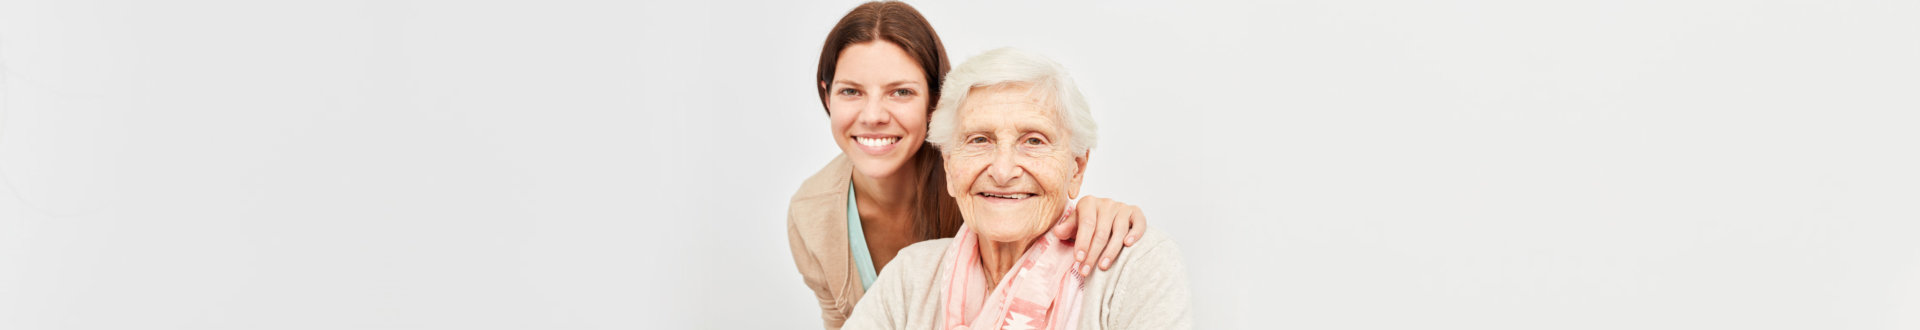 happy senior woman and caregiver